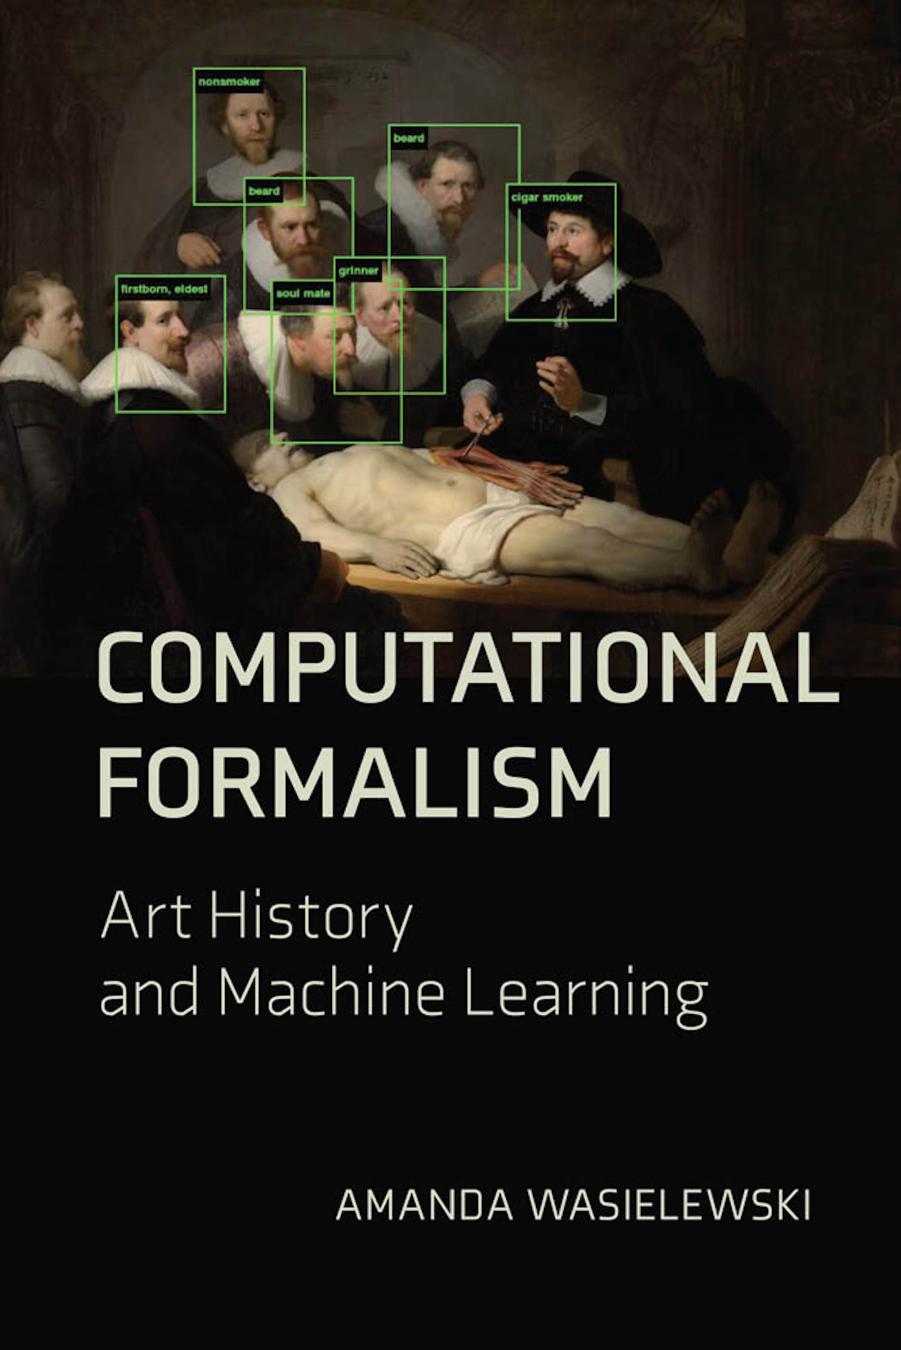 Computational Formalism: Art History and Machine Learning by Amanda Wasielewski